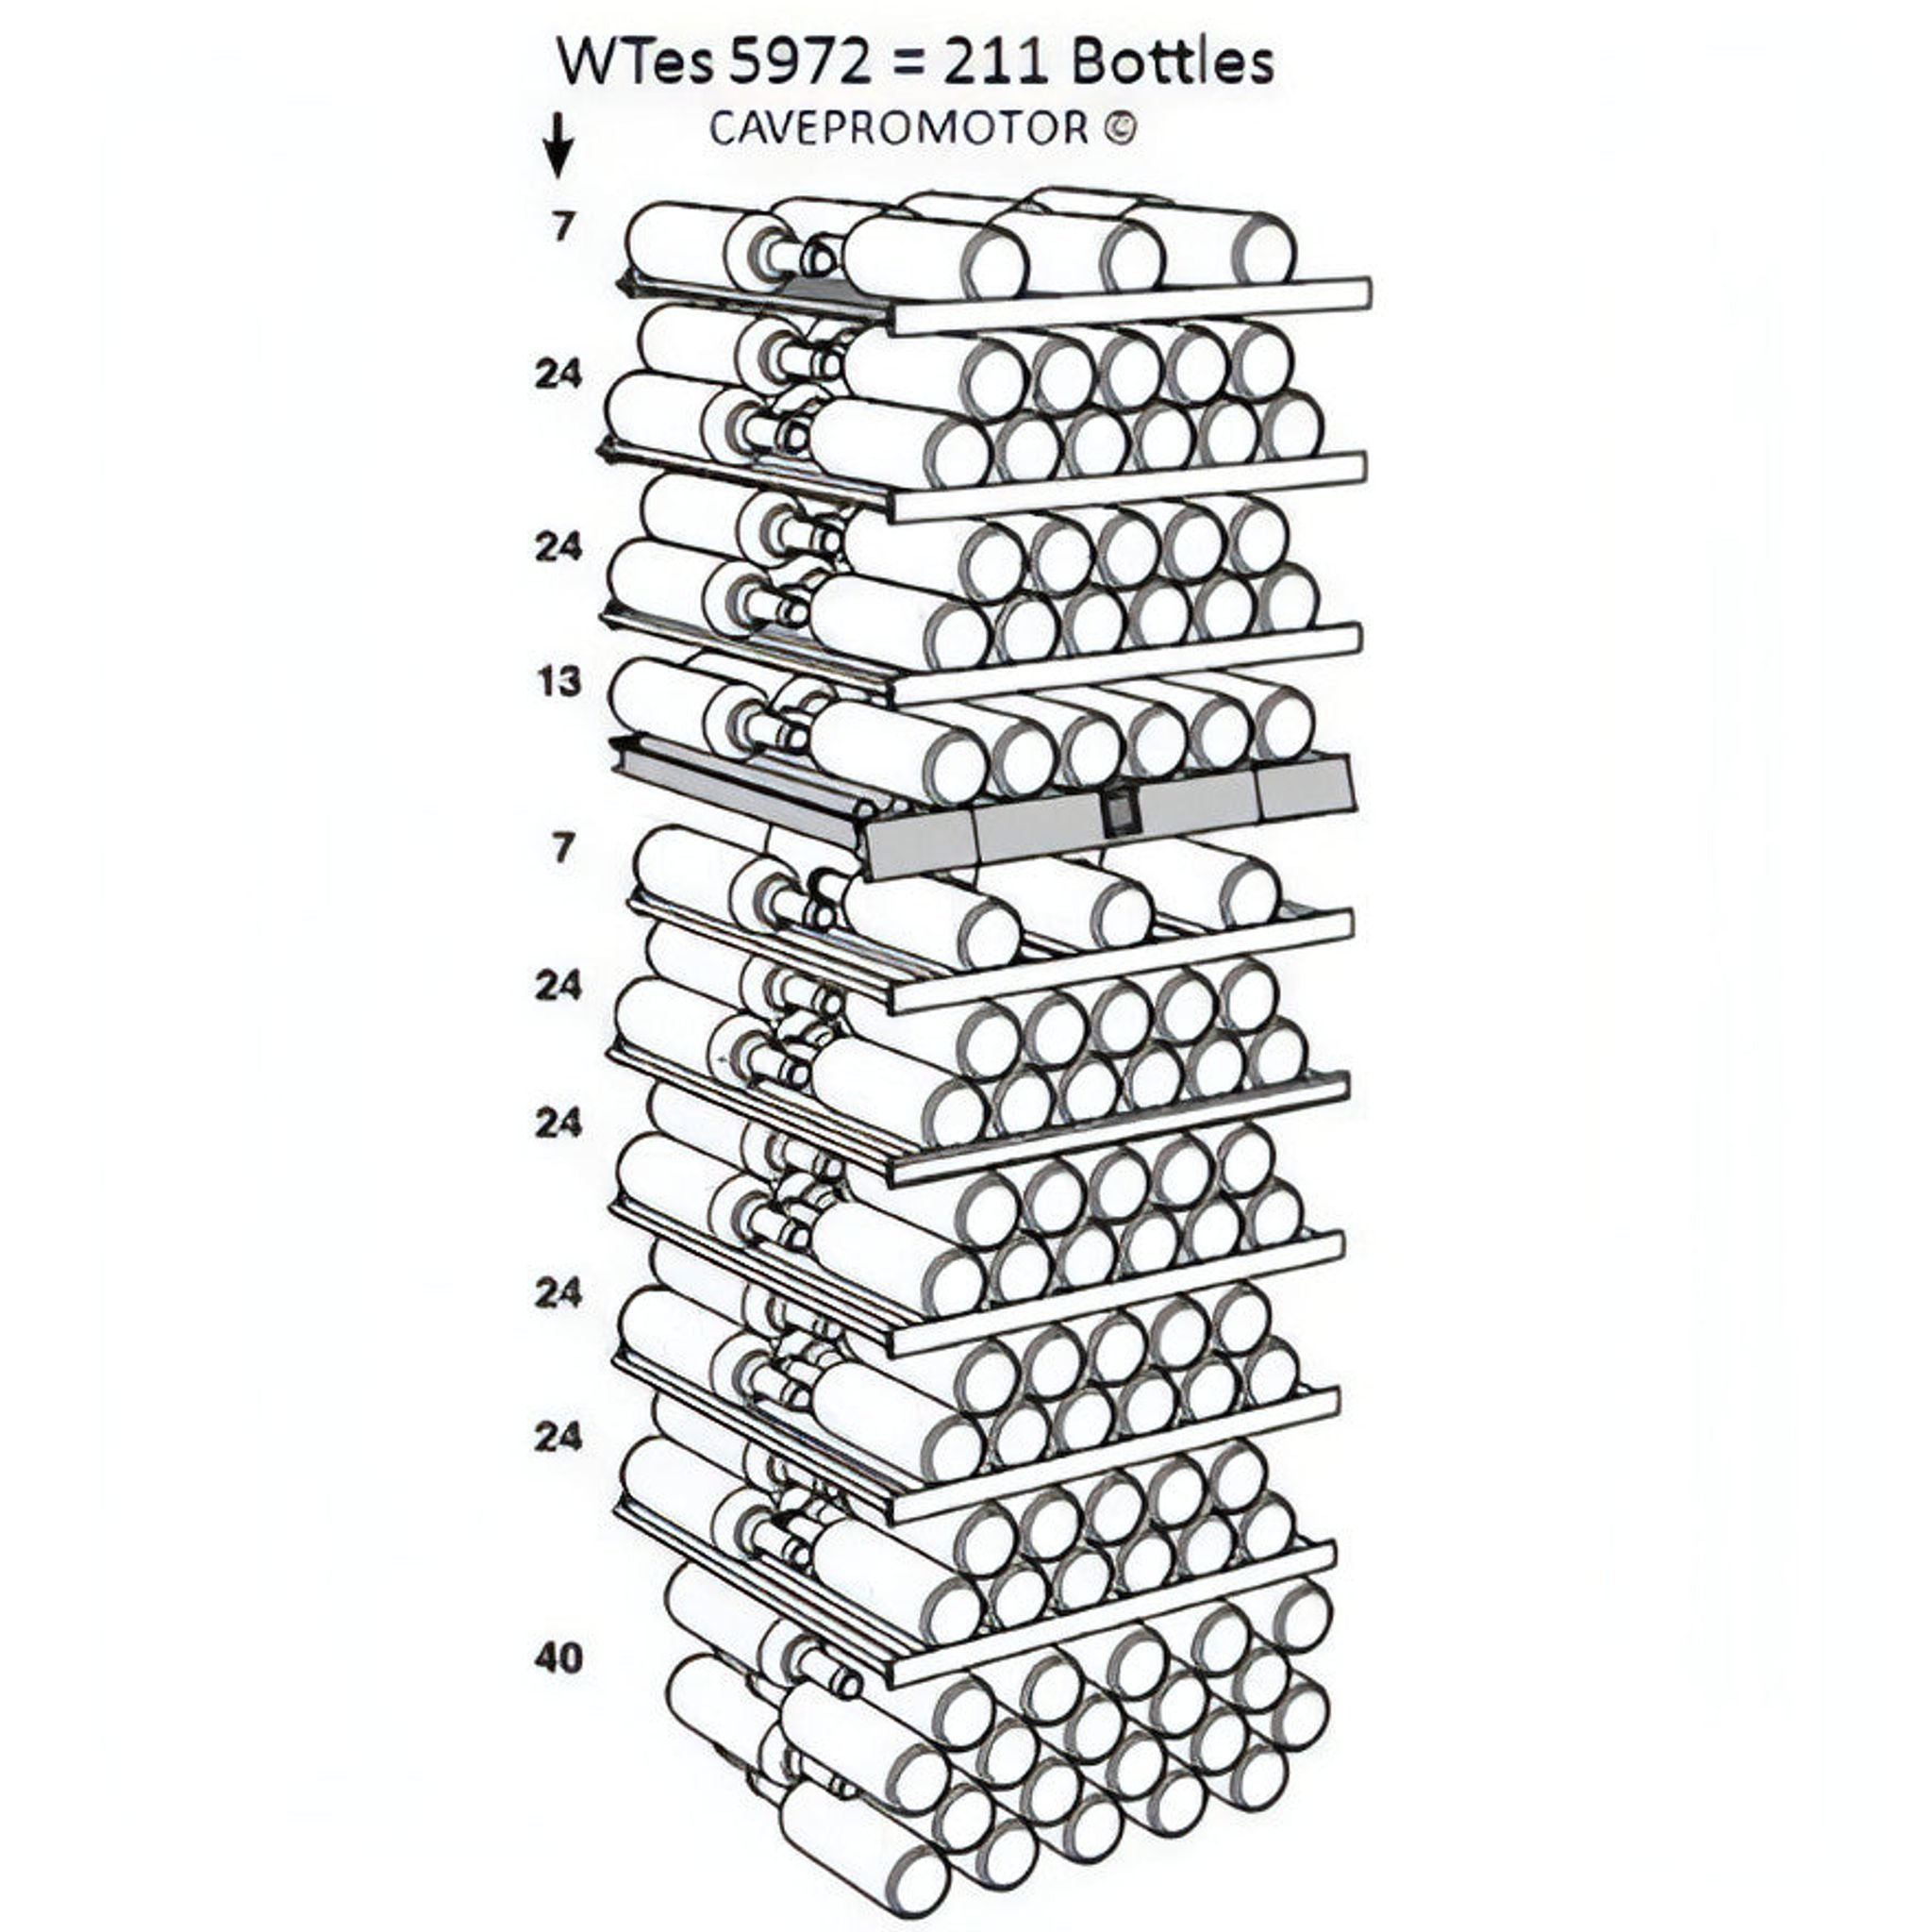 Liebherr - 211 Bottle Dual Temperature Zone freestanding Wine Fridge WTES 5972